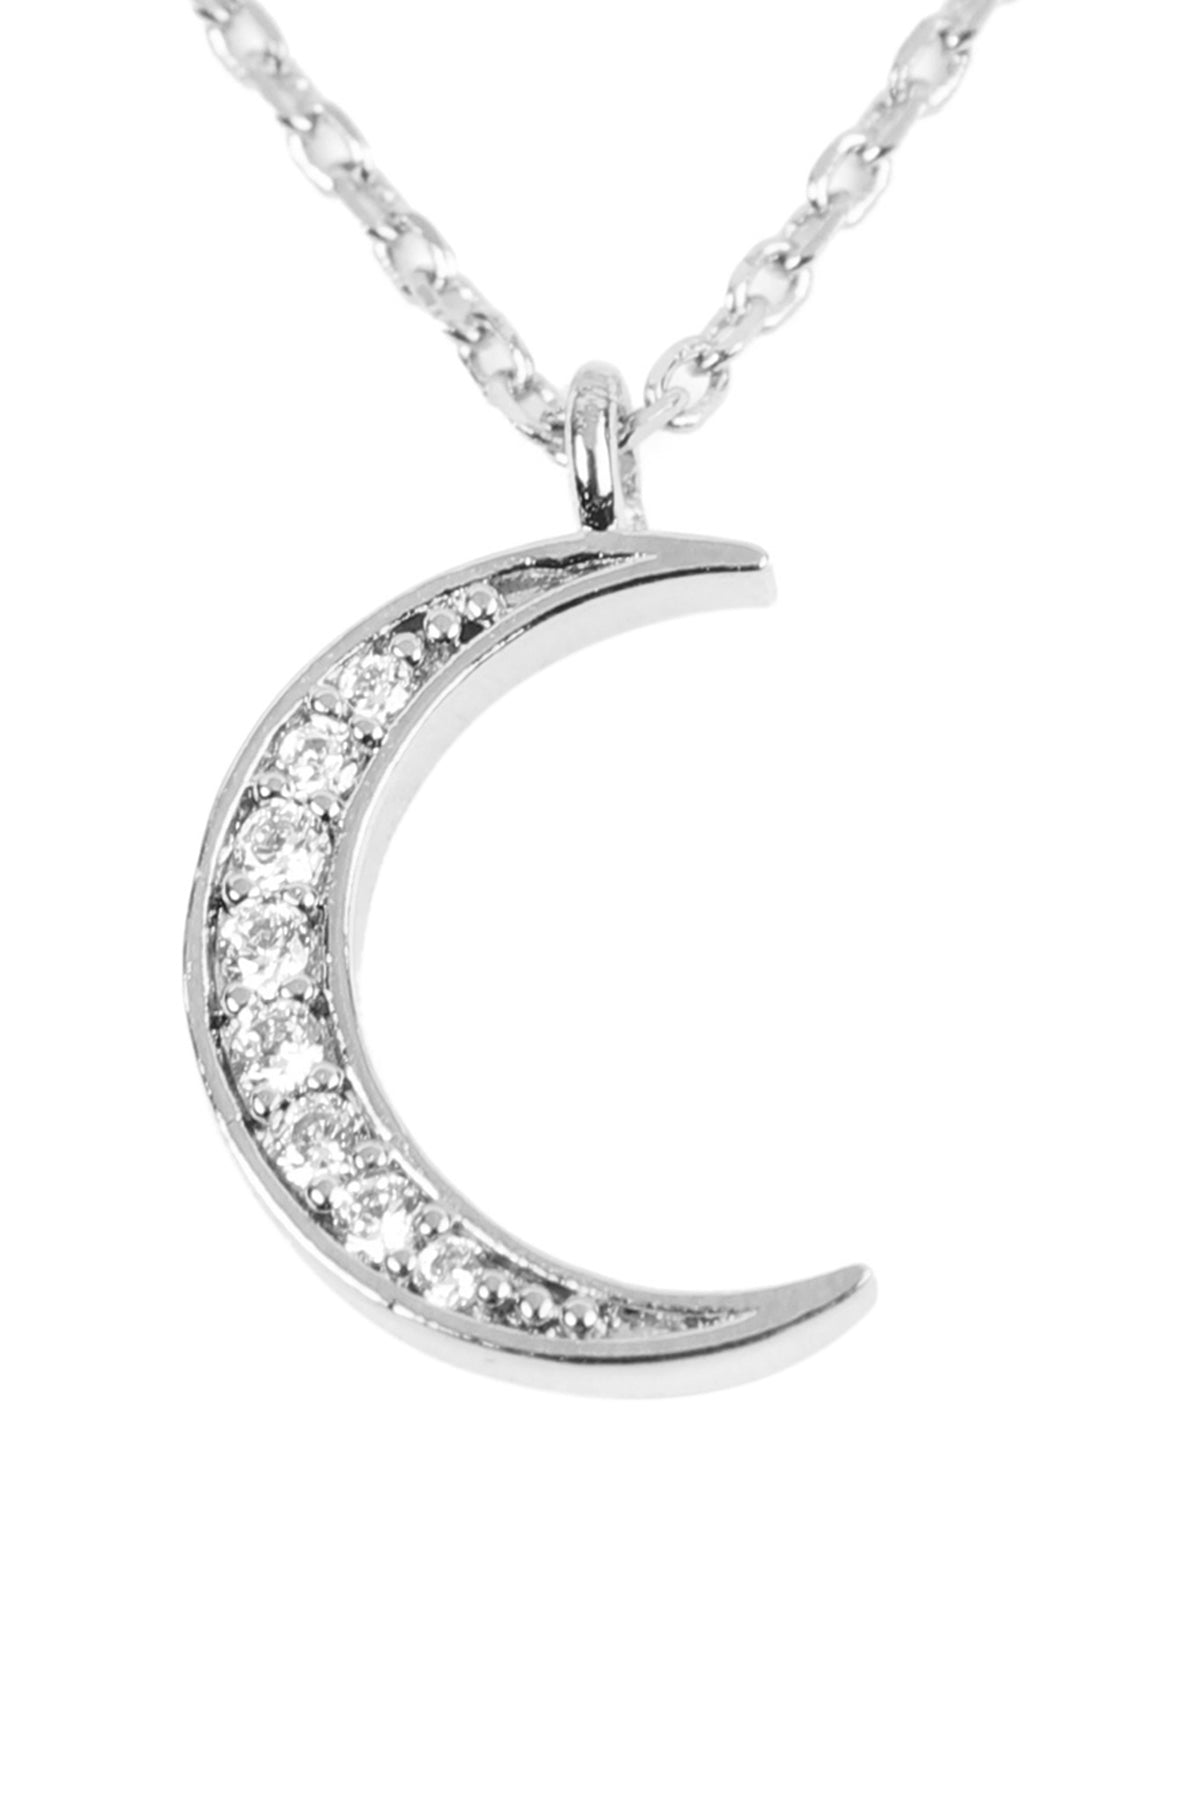 Sparkling Delicate Crescent Moon Necklace